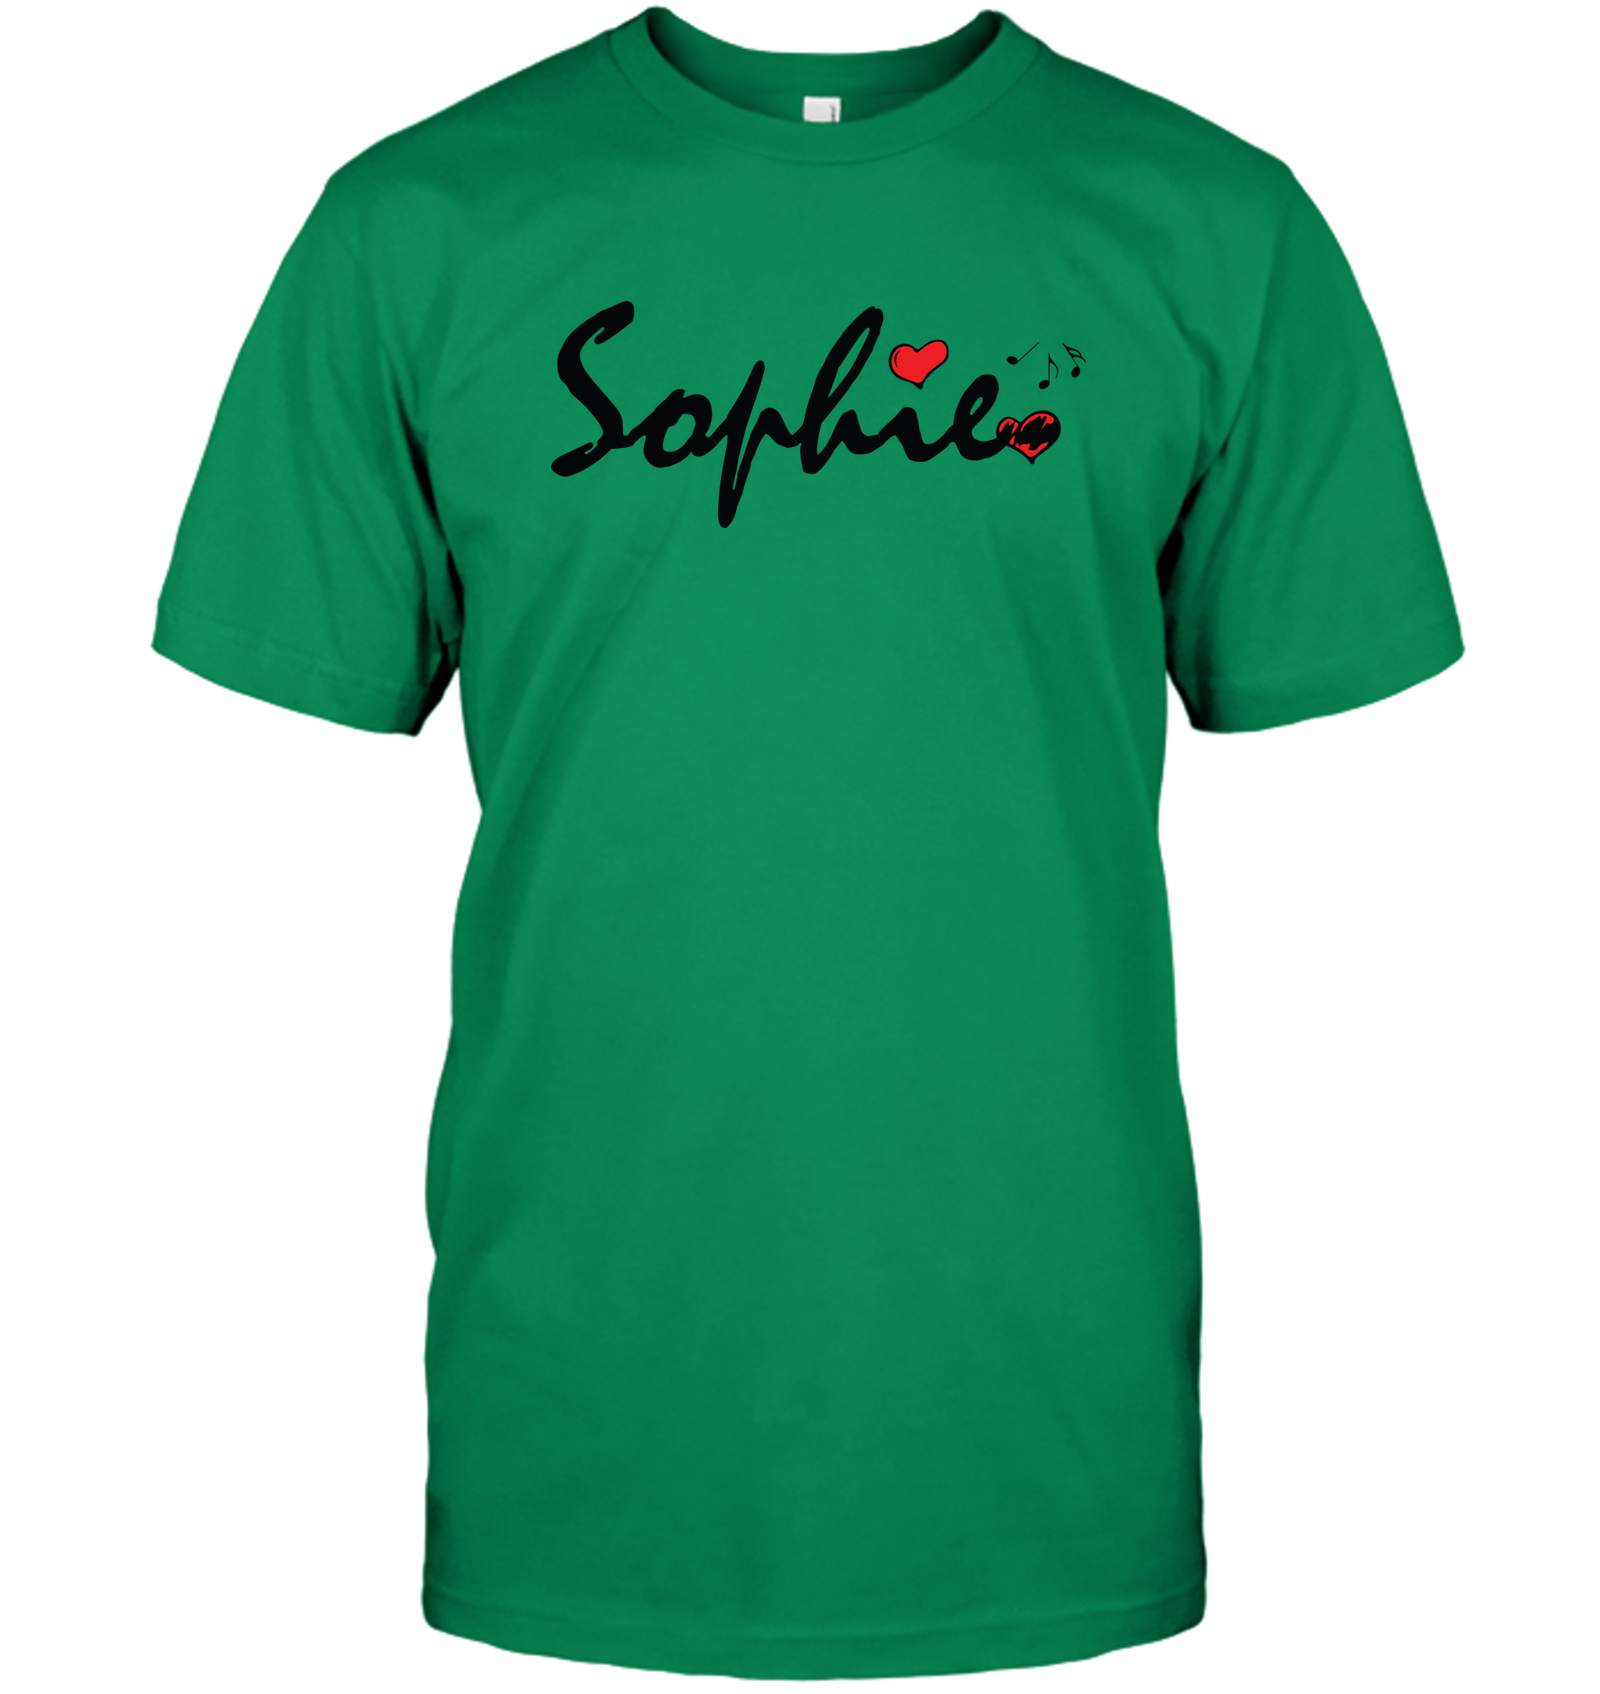 Sophie Loves Music - Hanes Adult Tagless® T-Shirt